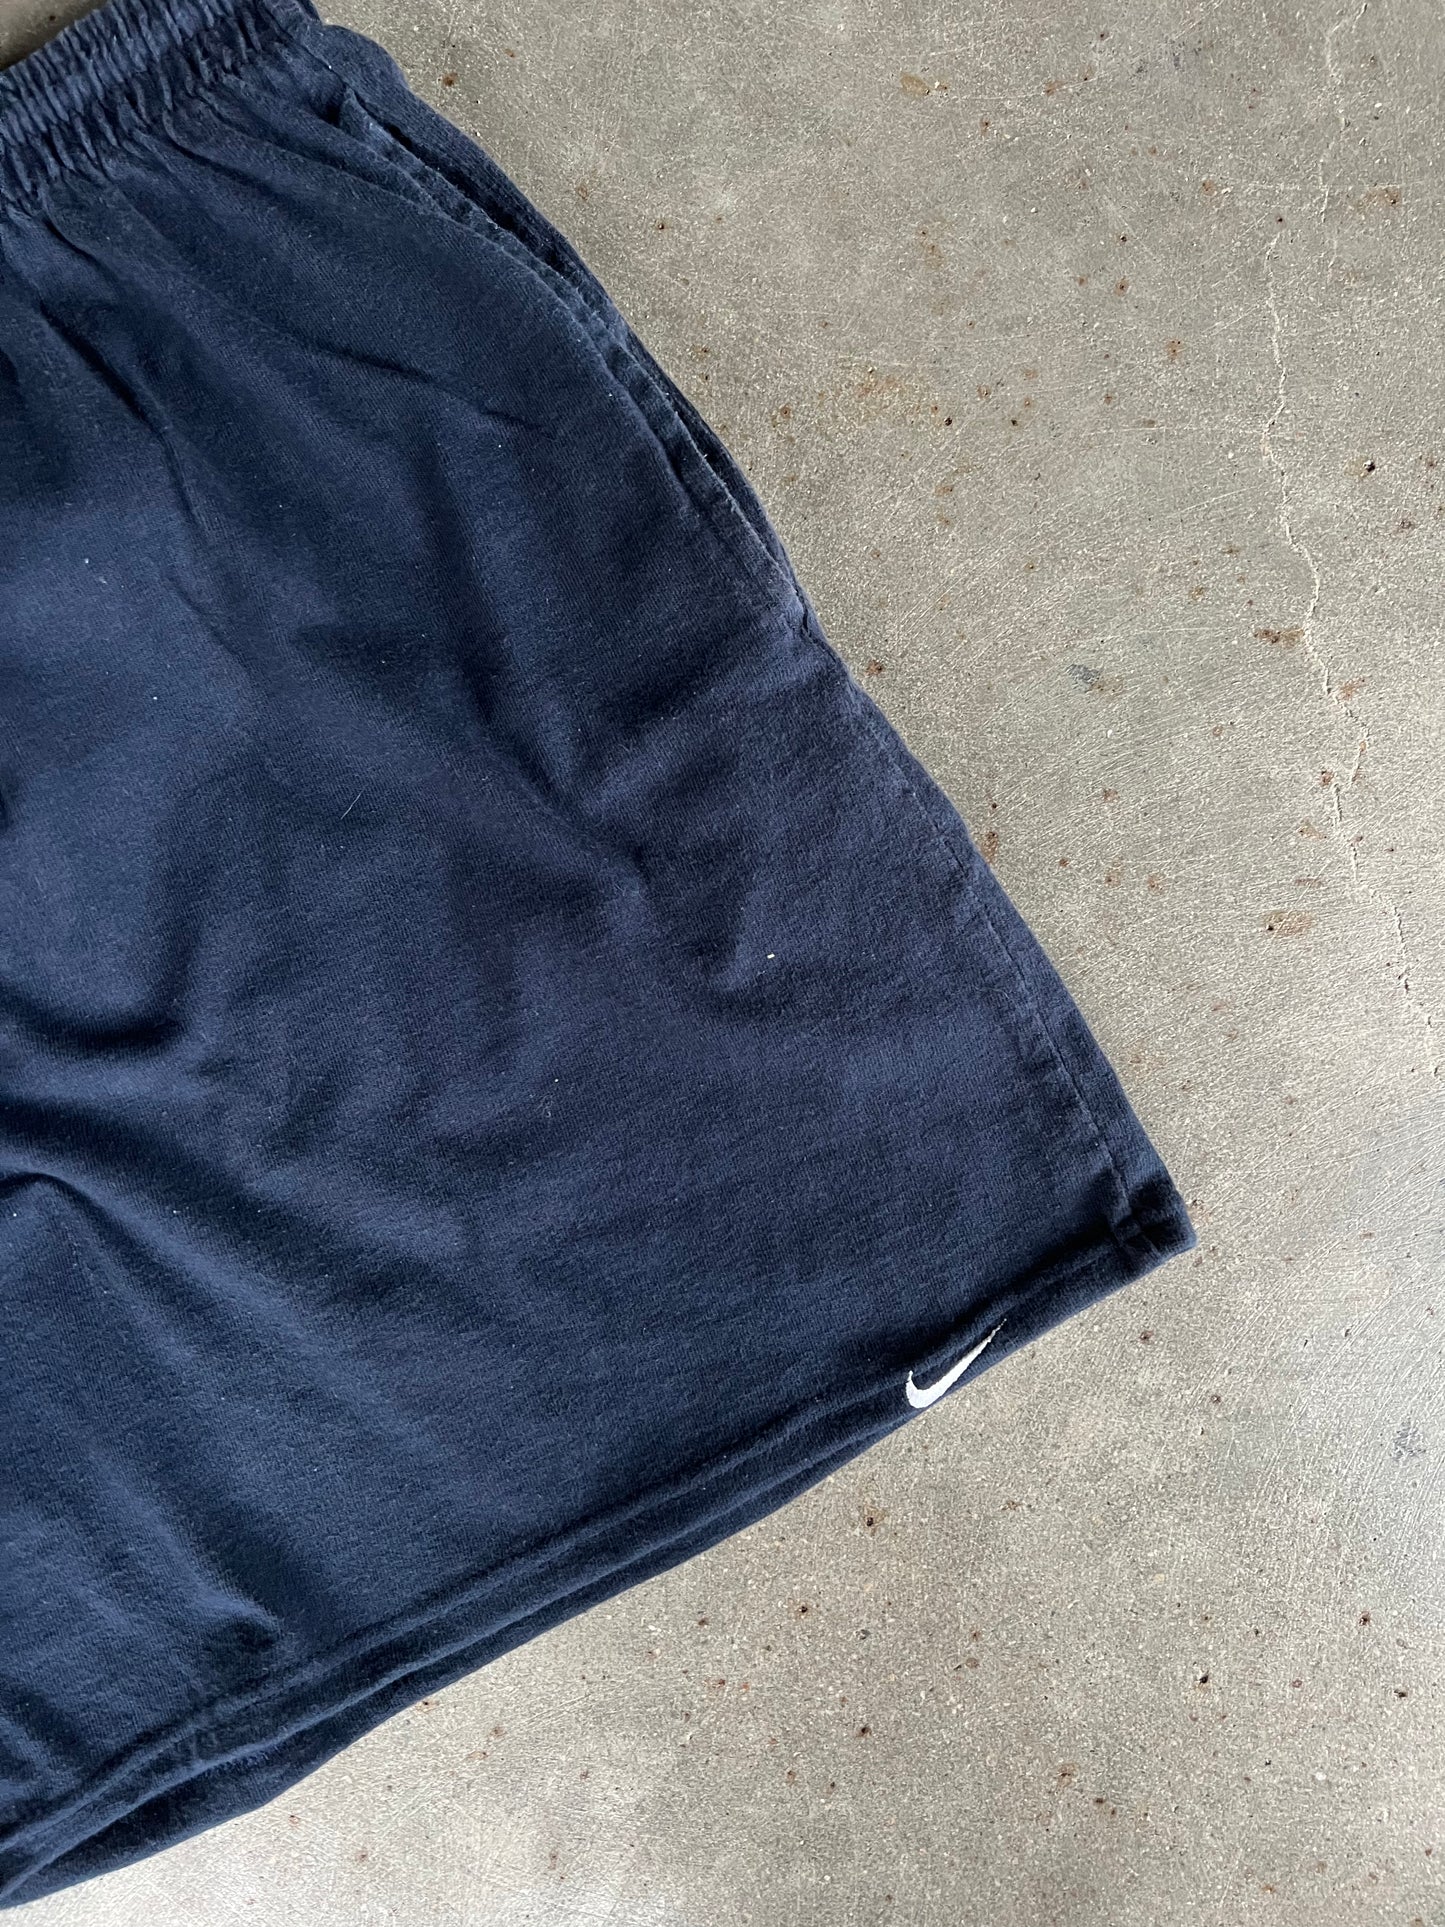 Reworked Nike Shorts - XXL